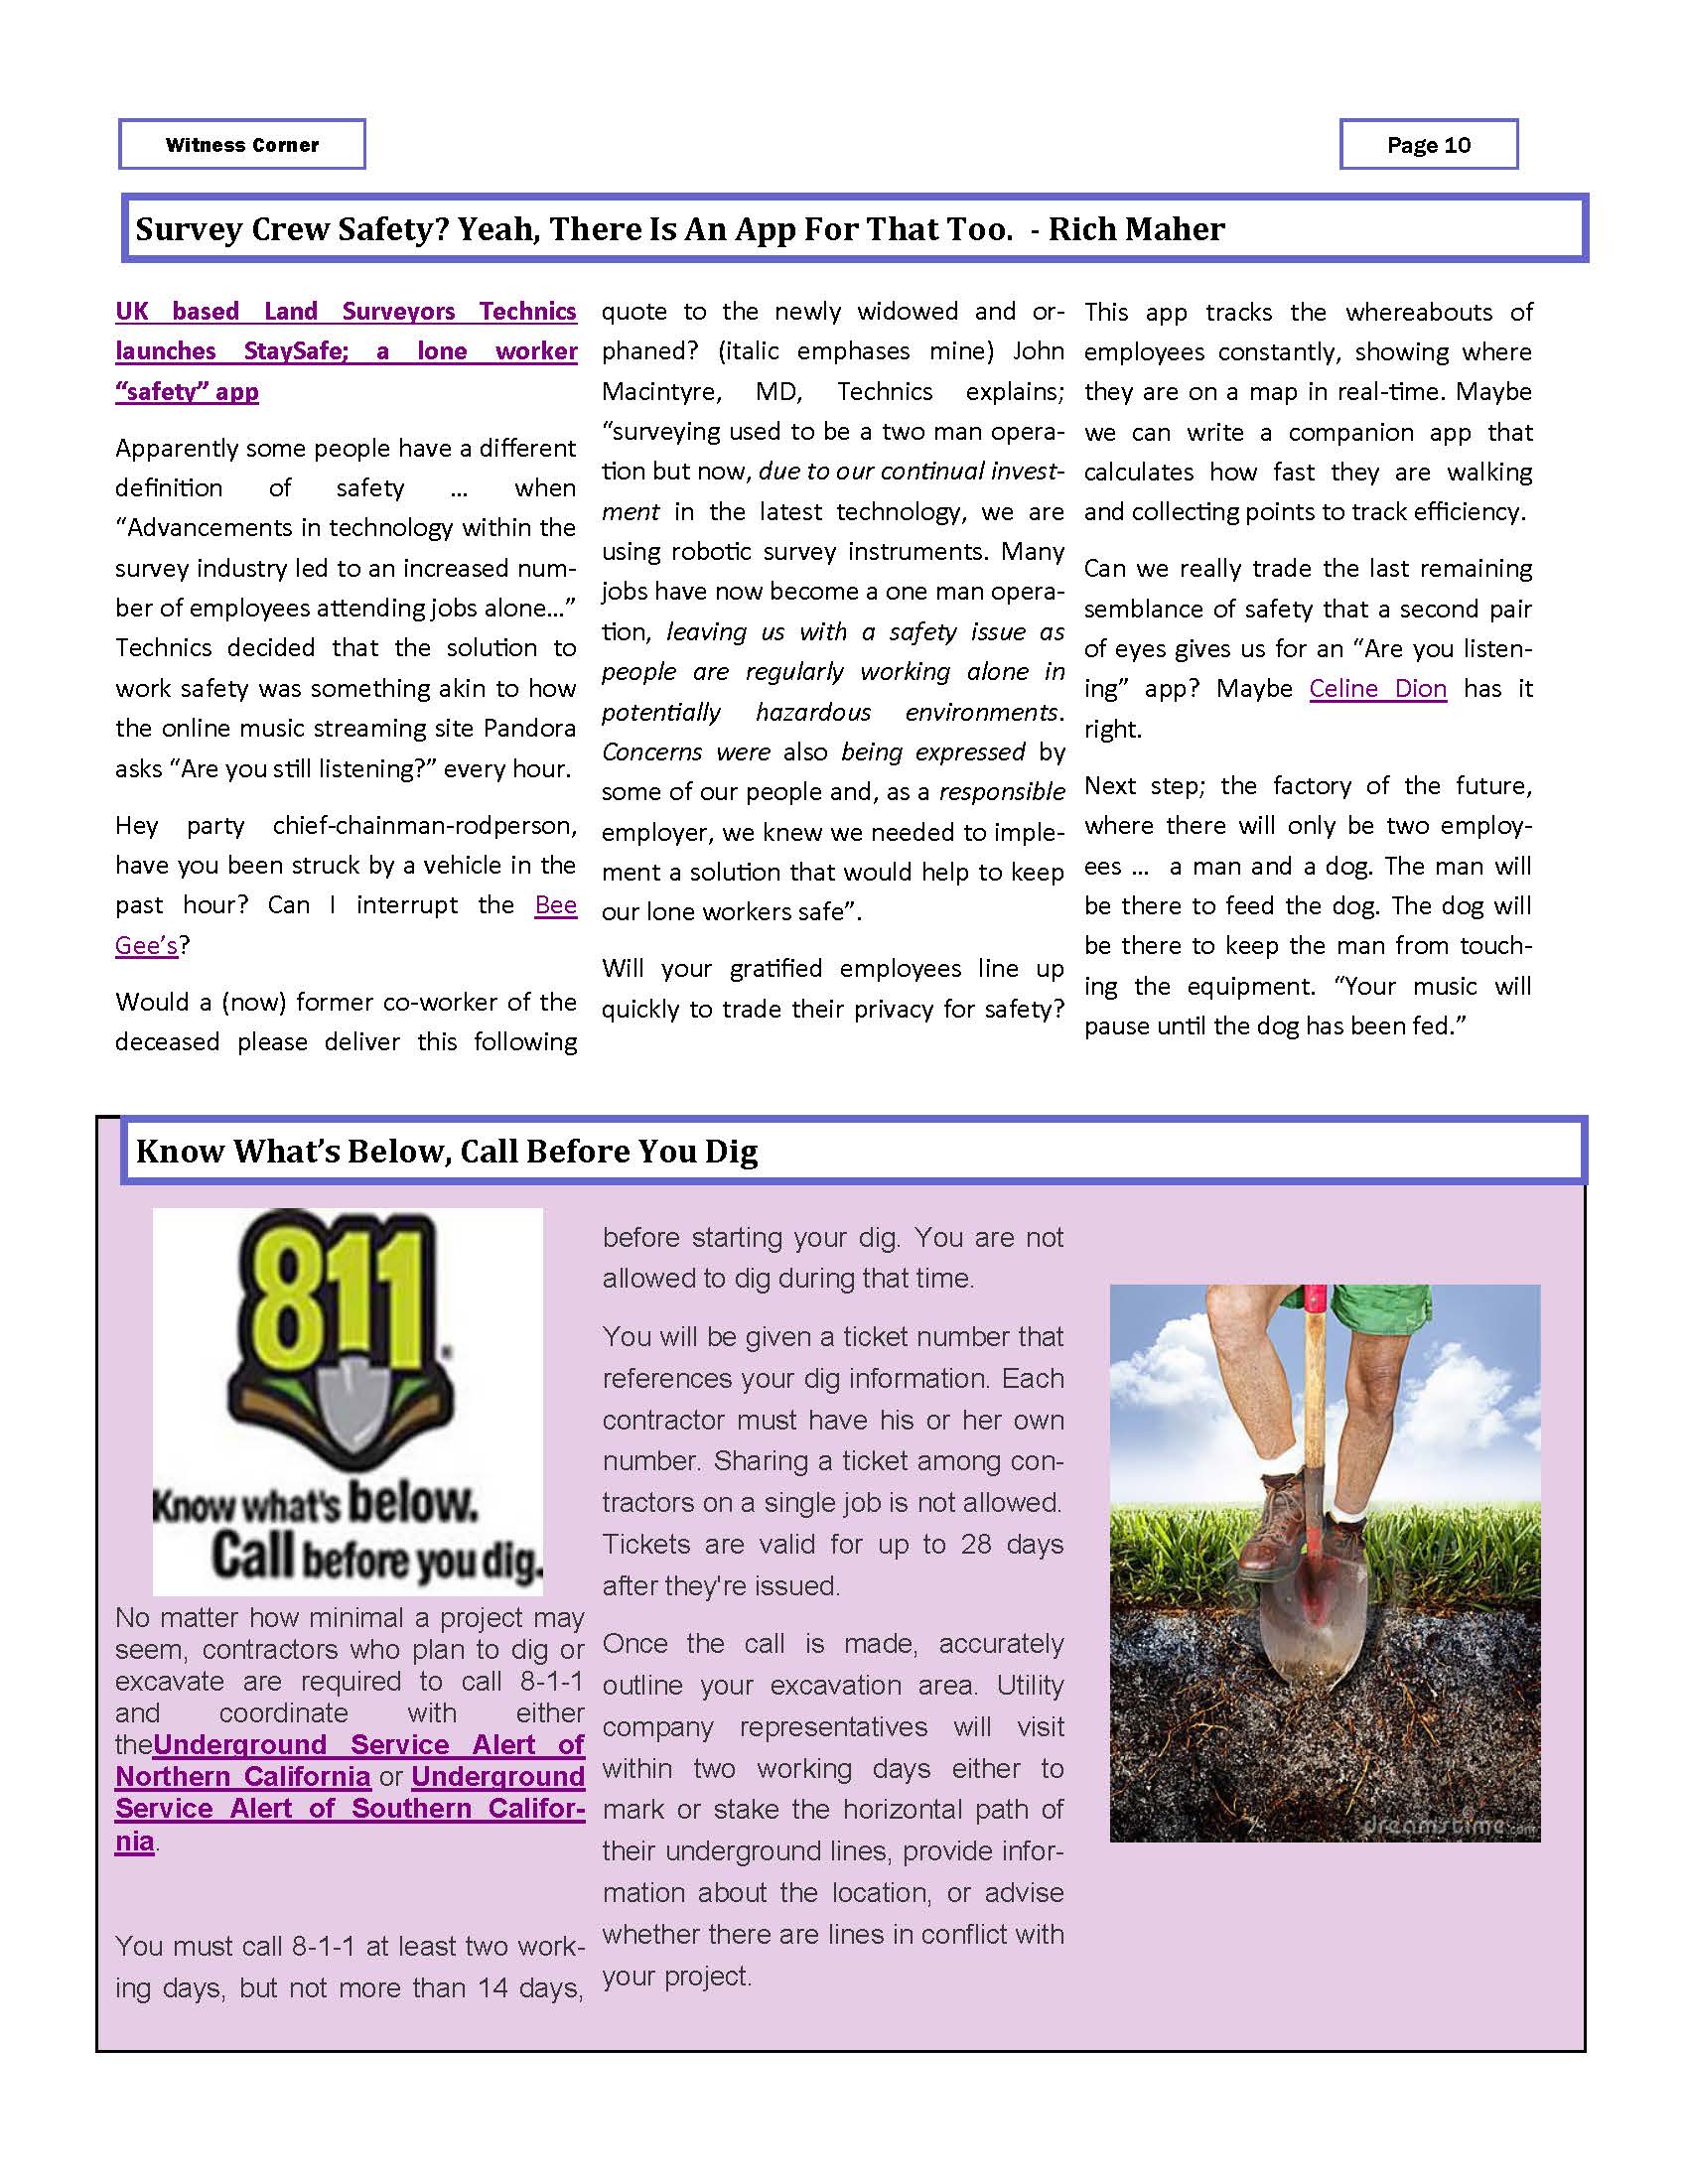 OC-CLSA 082015 Newsletter_Page_12.jpg